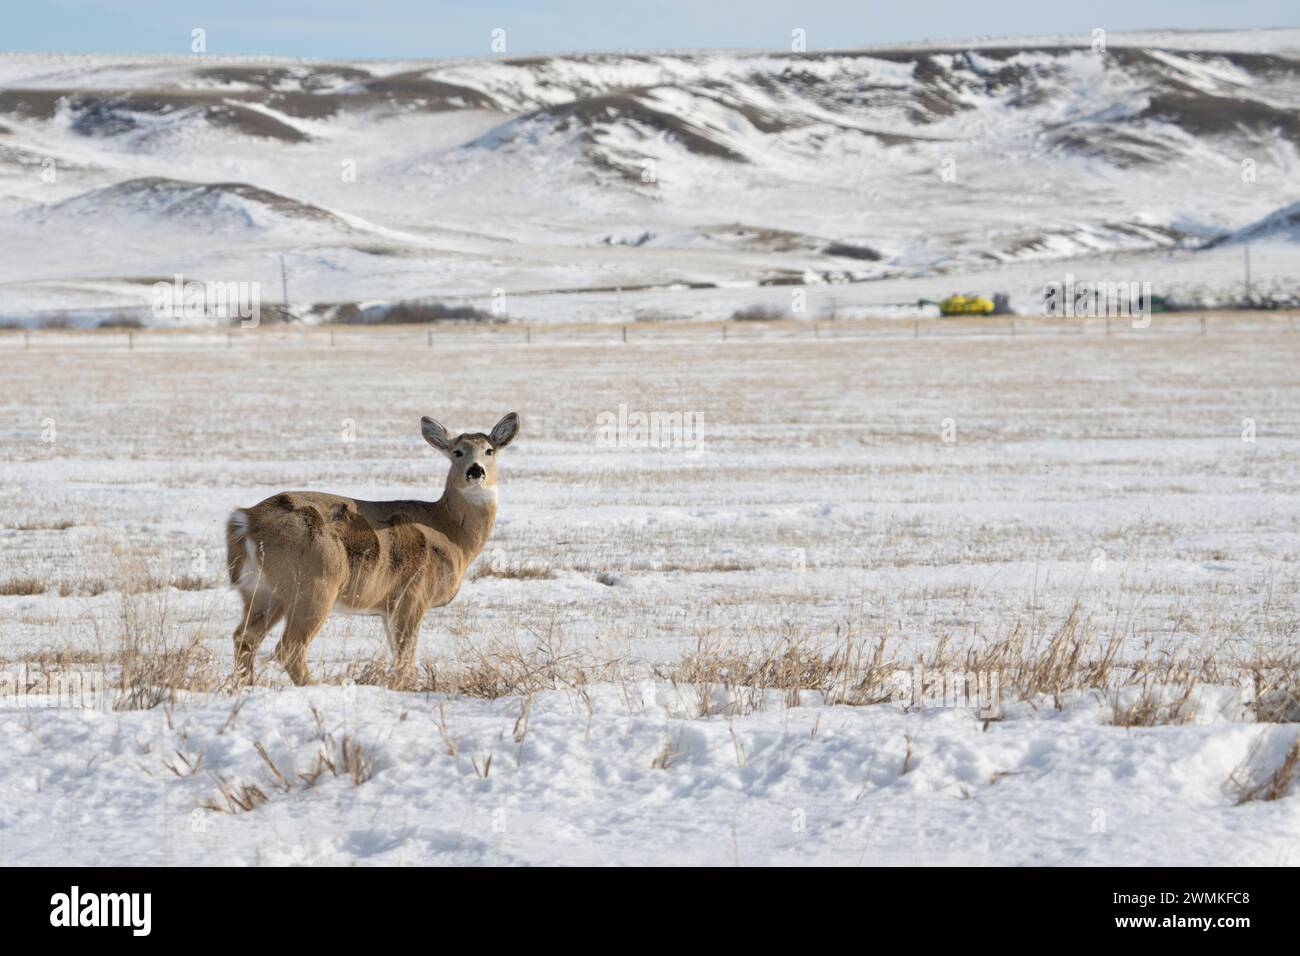 Mule deer (Odocoileus hemionus) watching the photographer in a wintery landscape; Val Marie, Saskatchewan, Canada Stock Photo